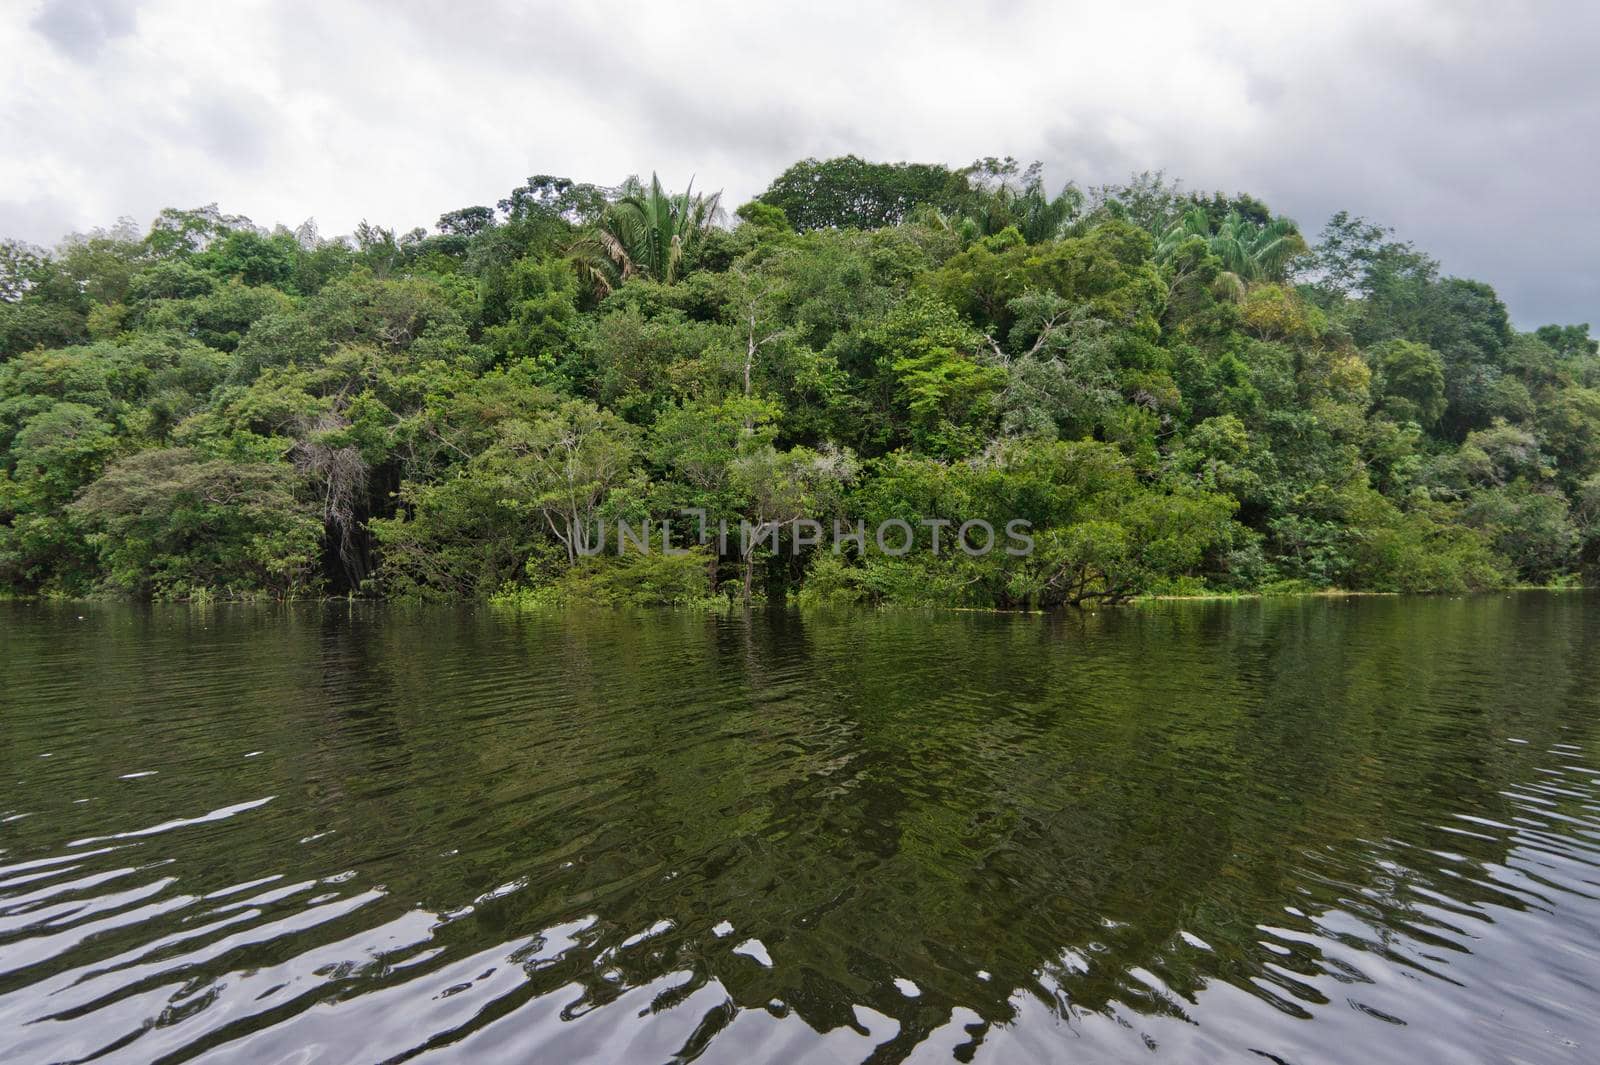 Amazon river reflection, Brazil, South America